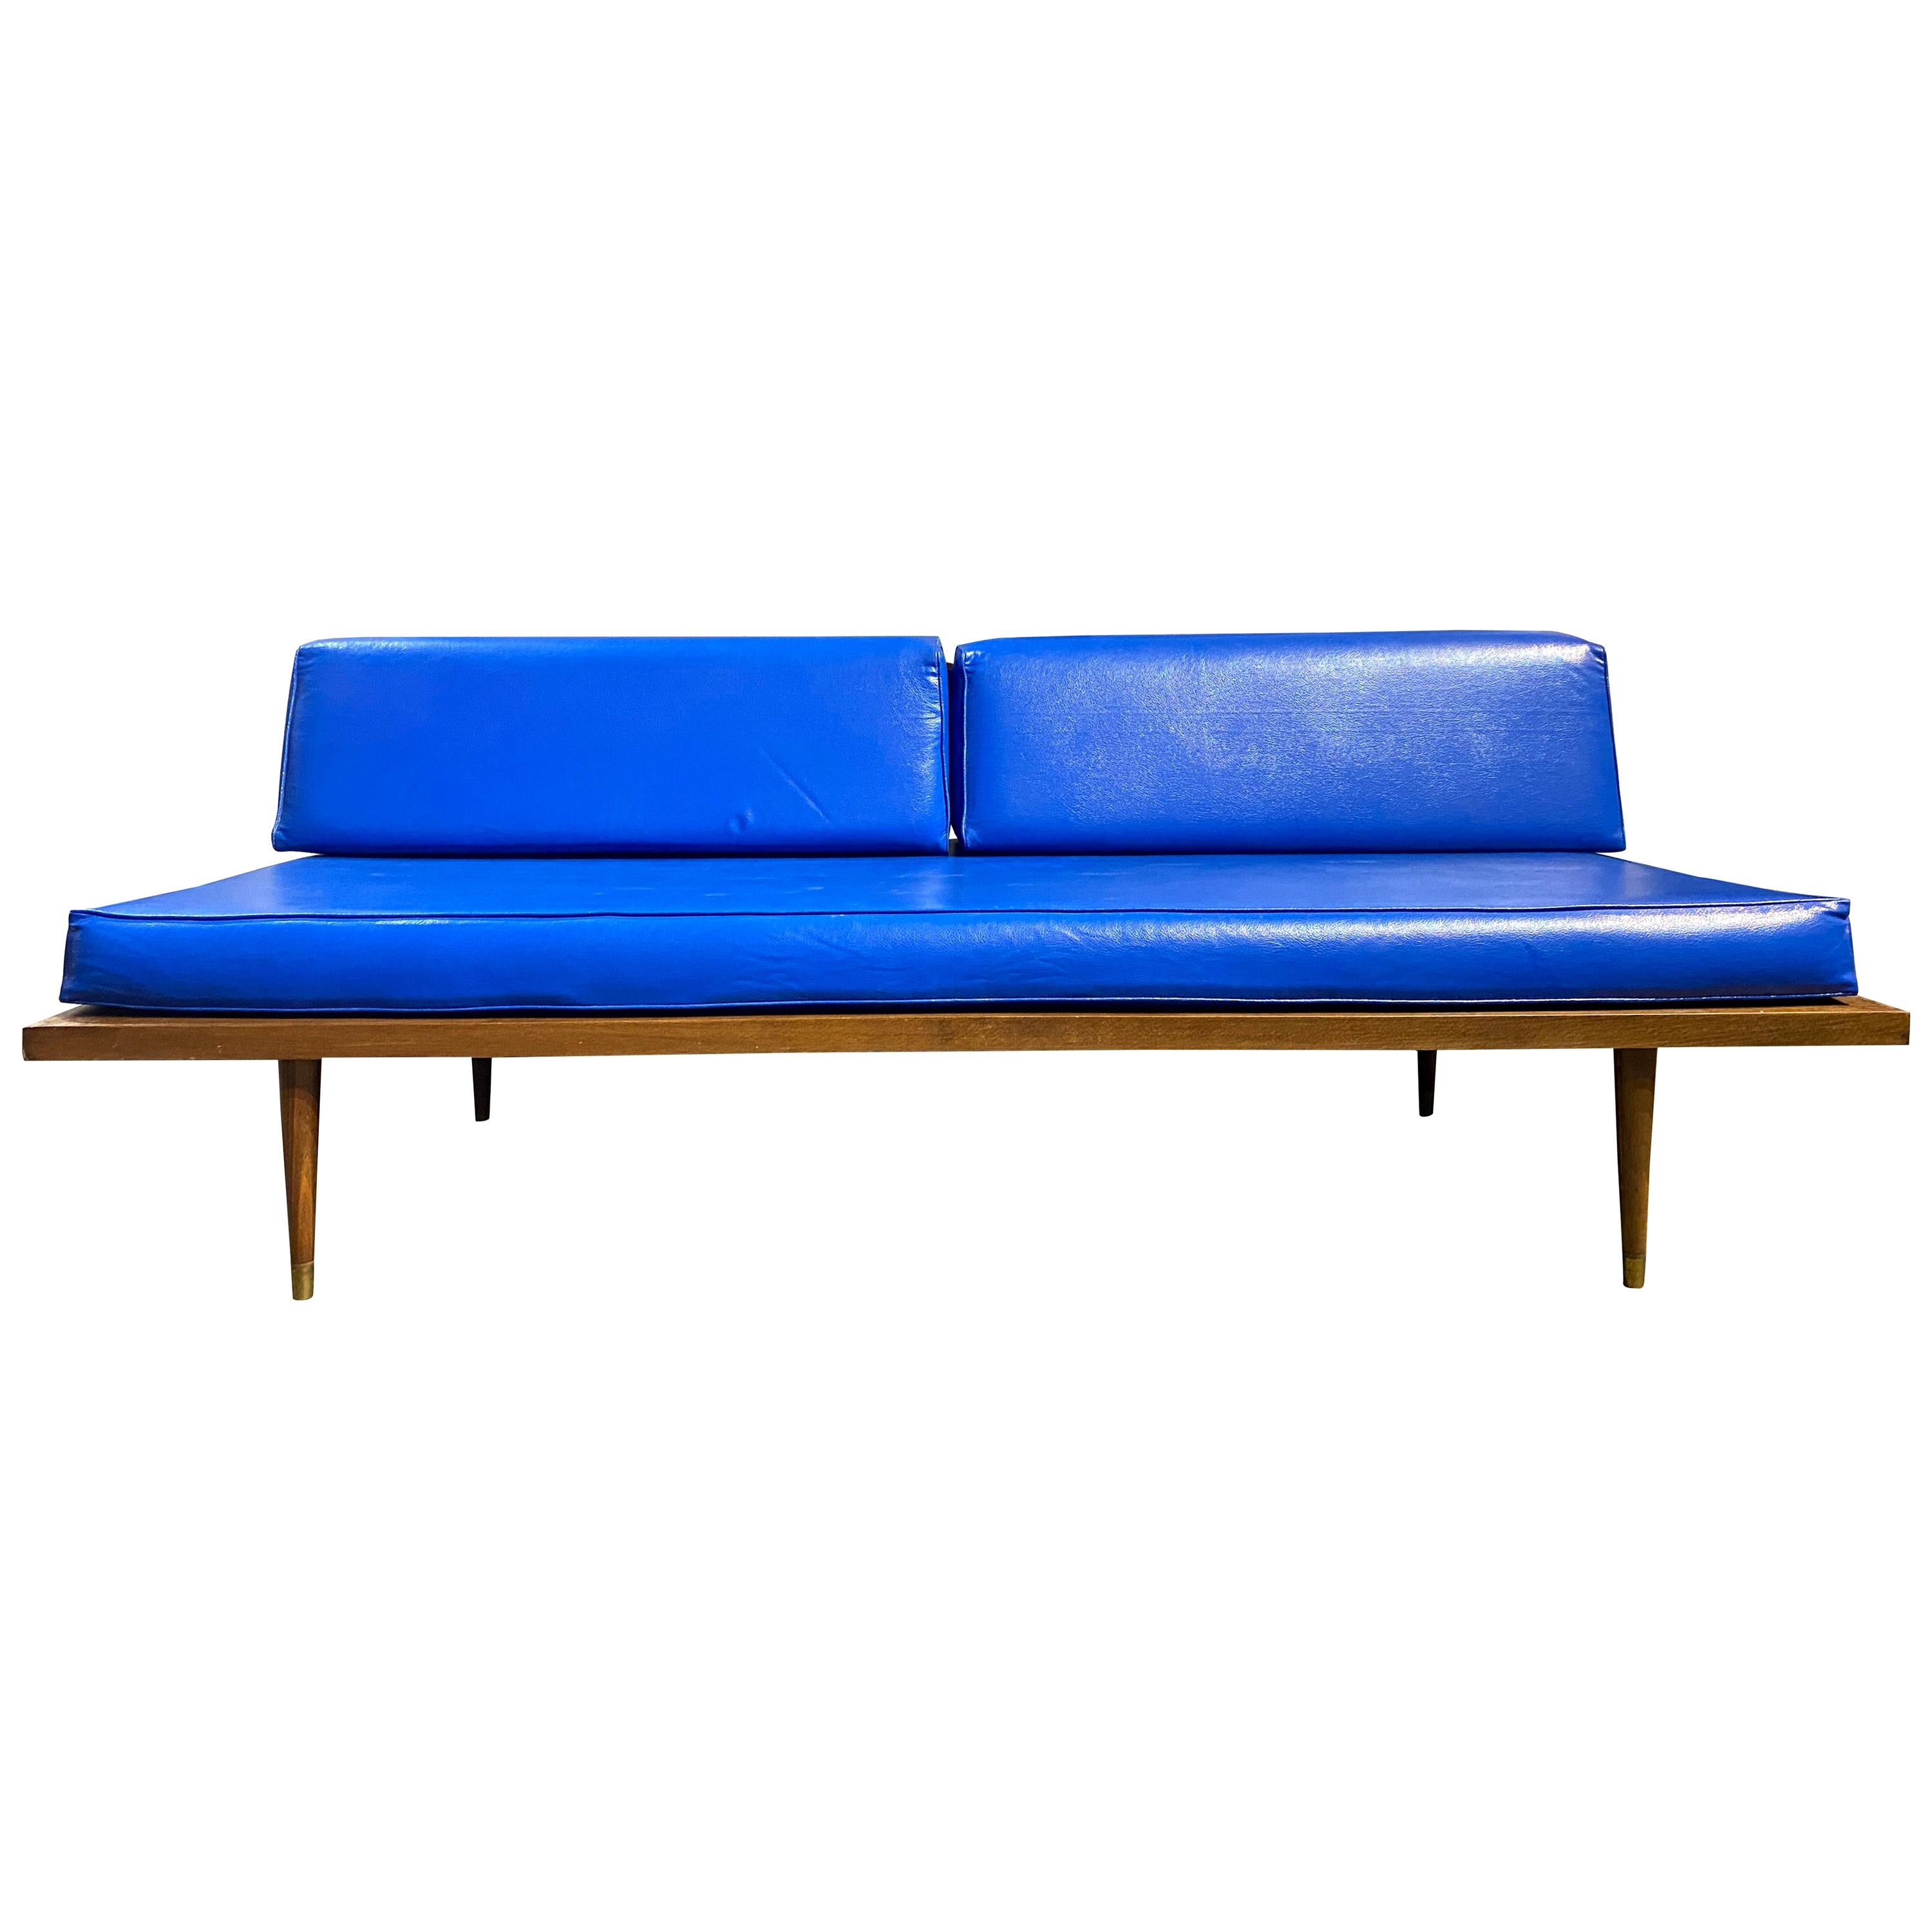 Midcentury Danish Modern Low Minimalist Daybed Bright Blue Vinyl Upholstery